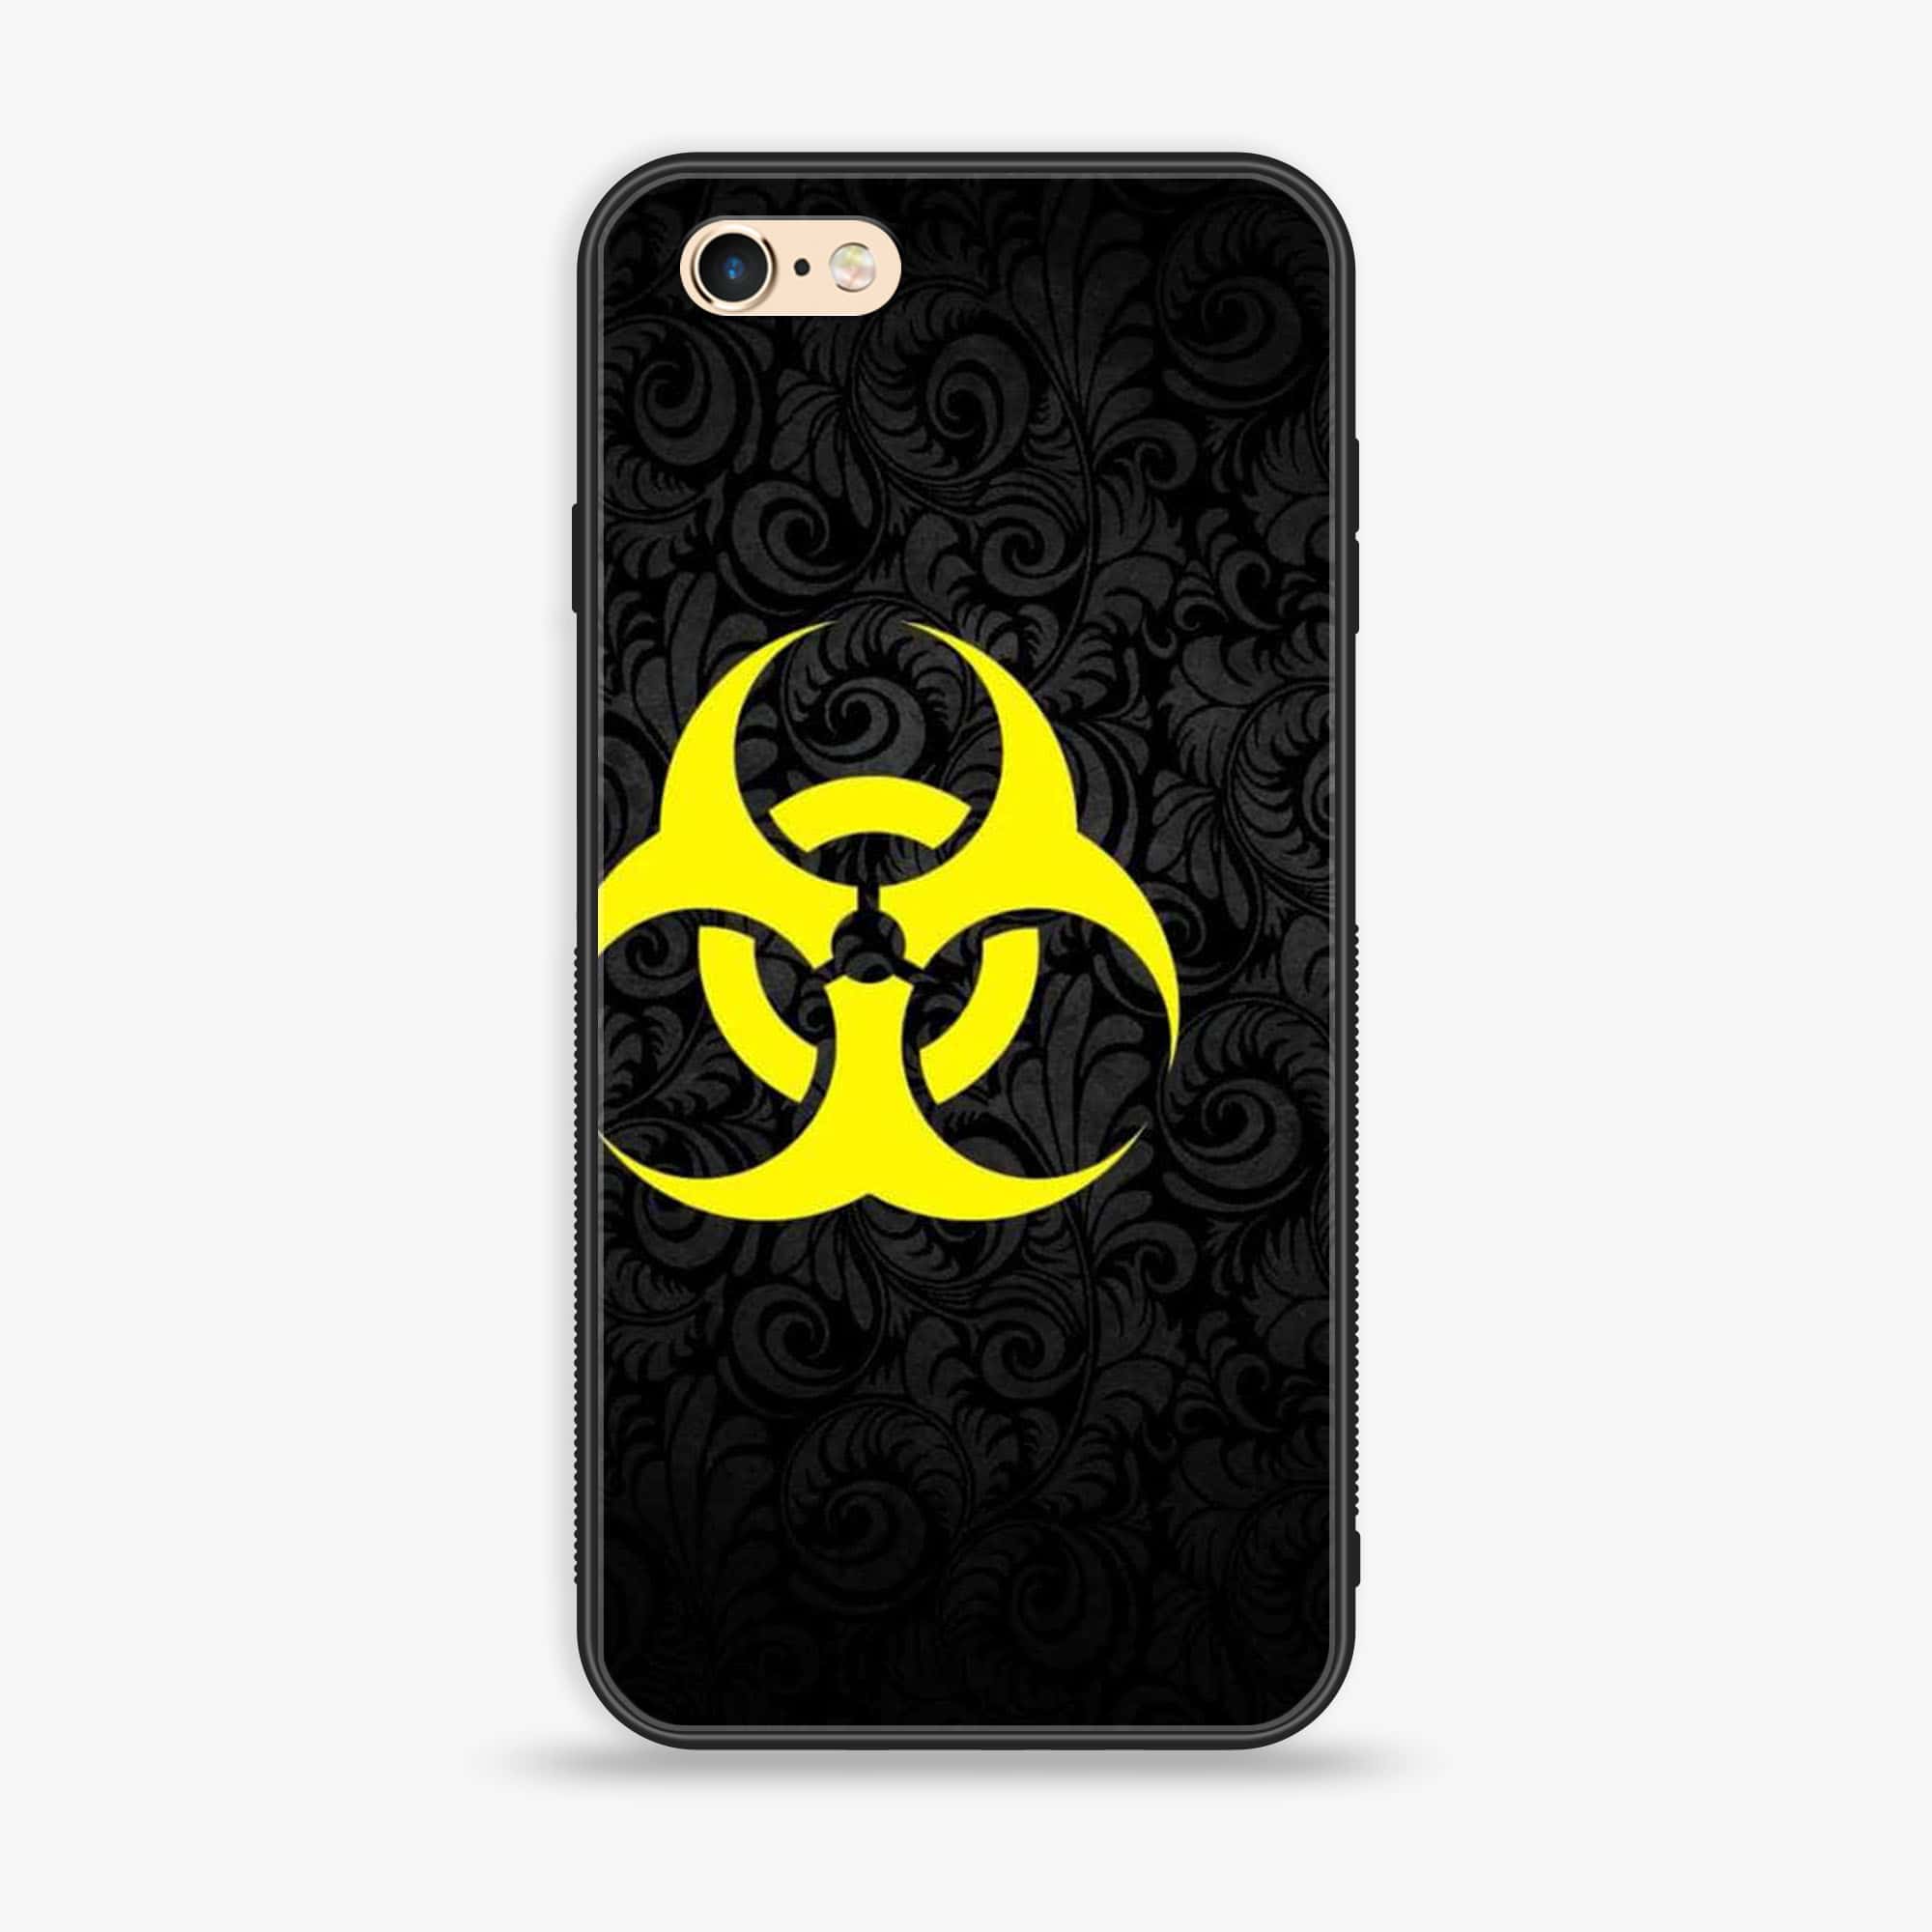 iPhone 6 - Biohazard Sign Series - Premium Printed Glass soft Bumper shock Proof Case